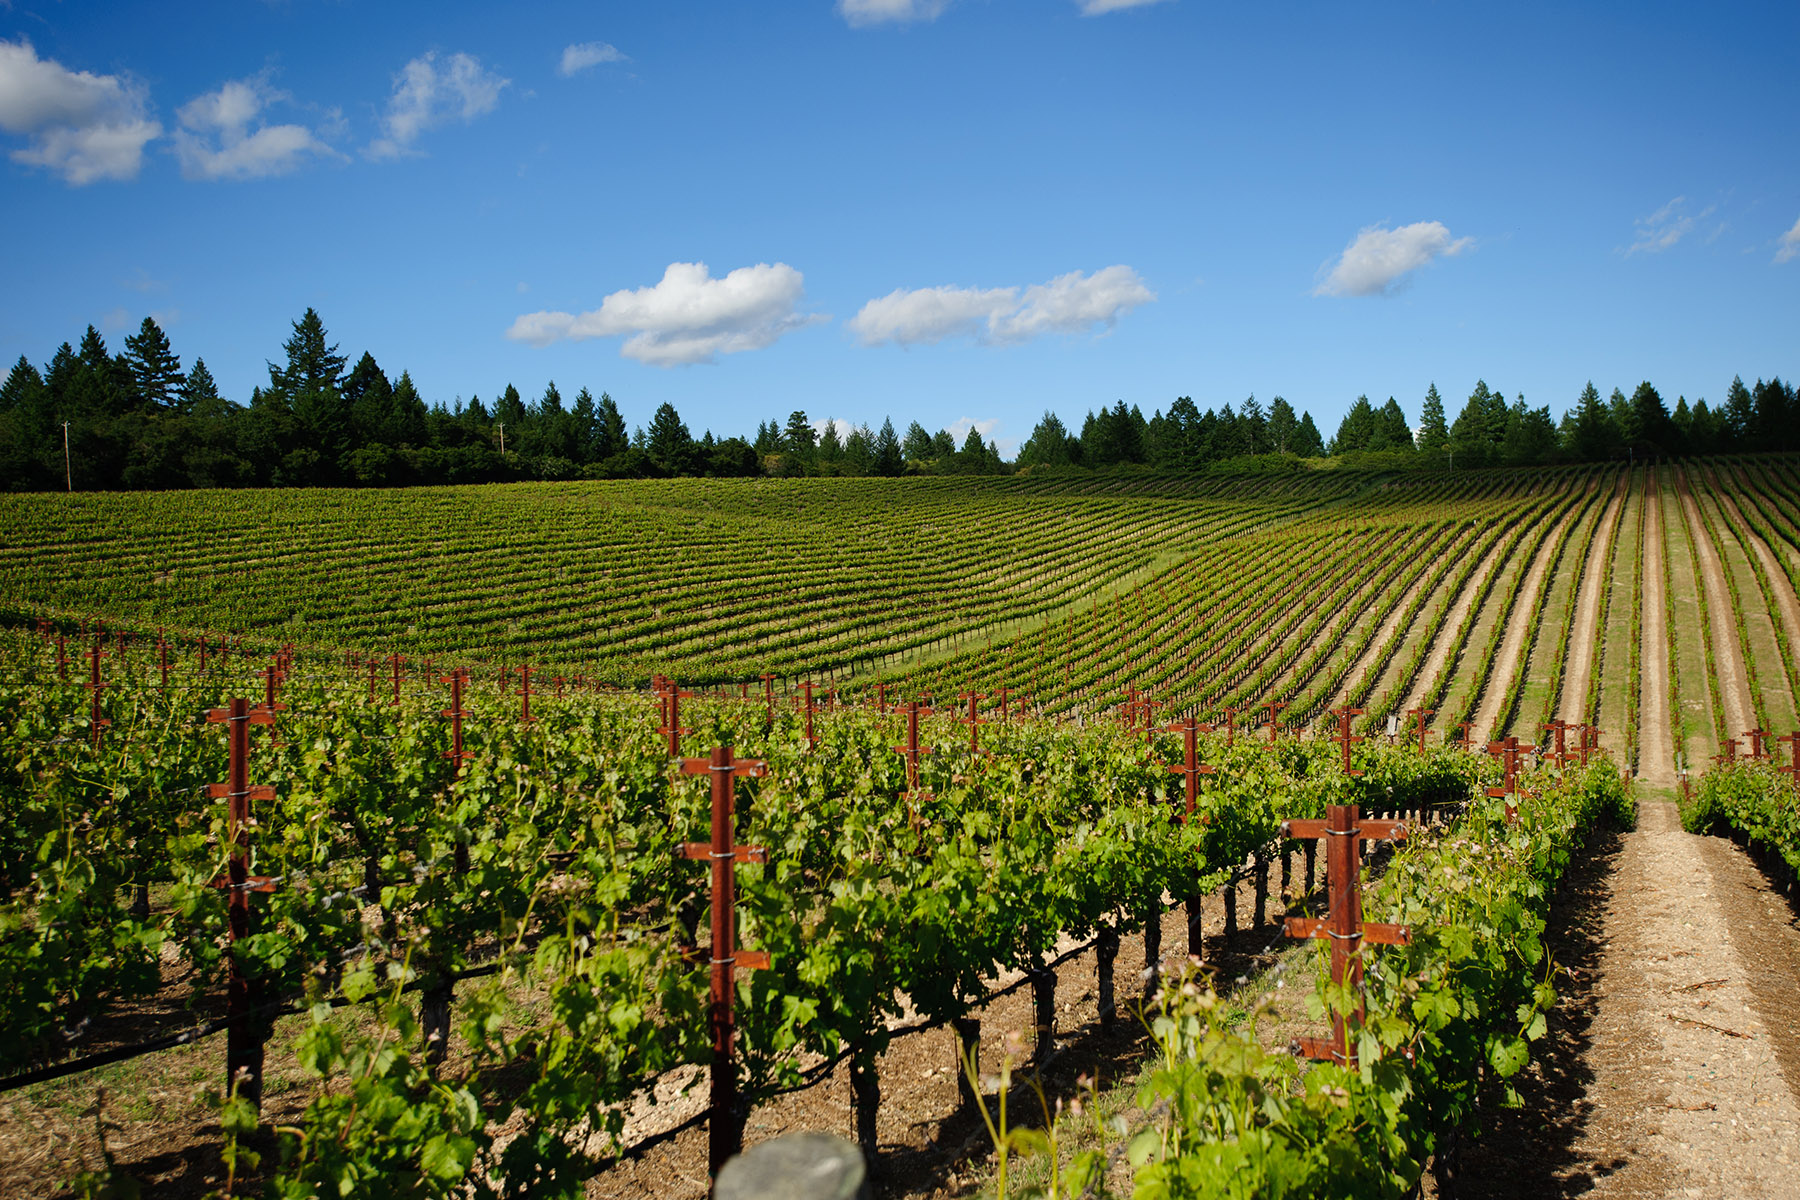 Northern California vineyards